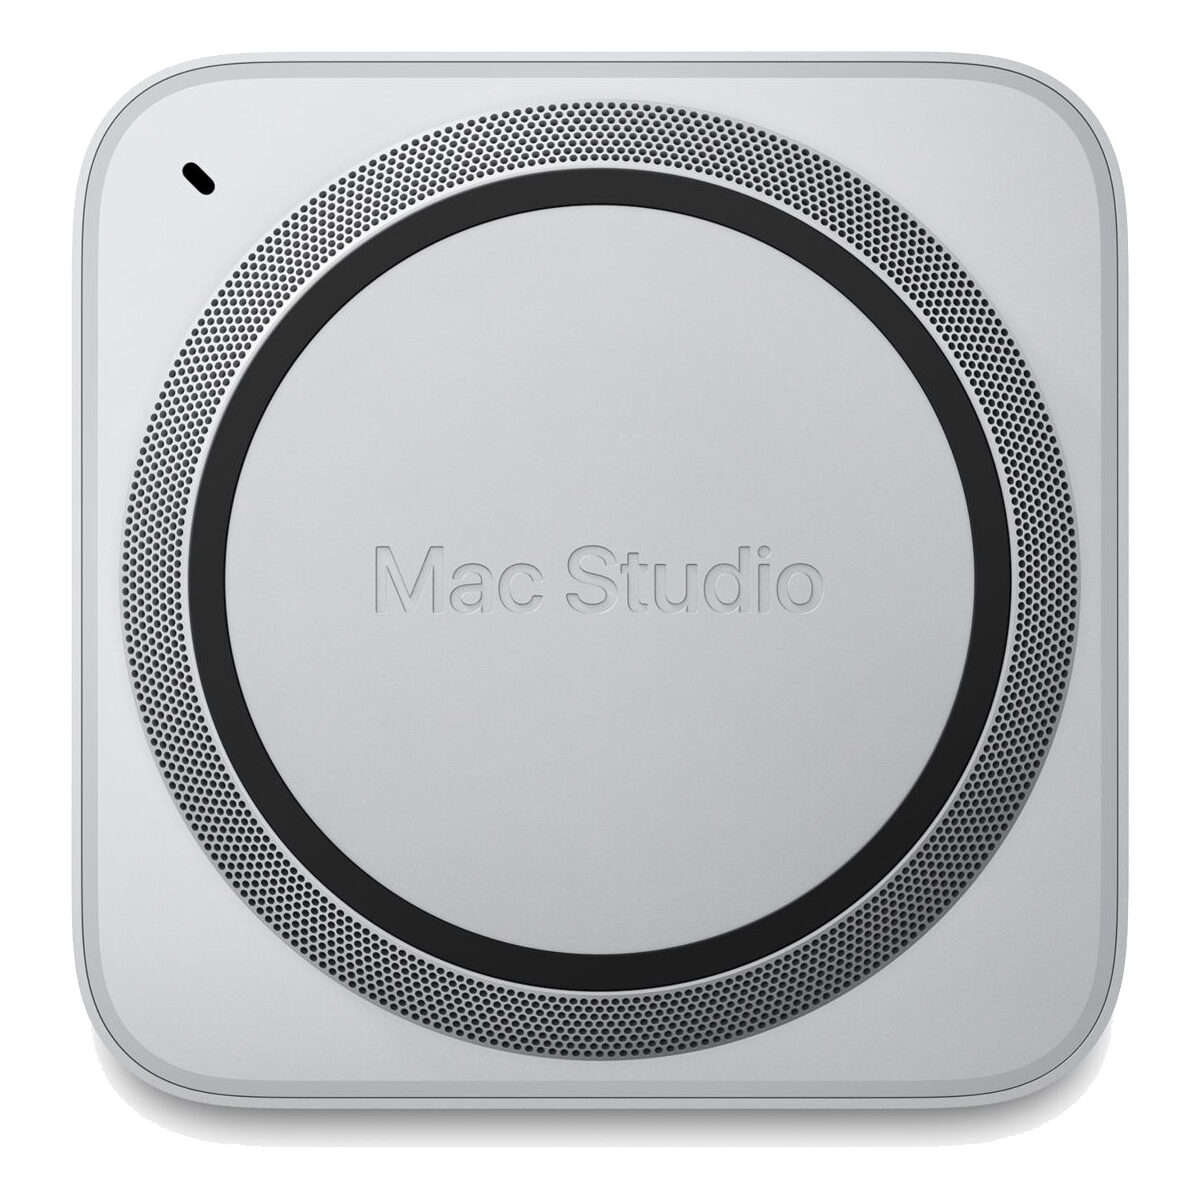 Apple Mac Studio M1 Max chip with 10-core CPU and 24-core GPU, 512GB SSD